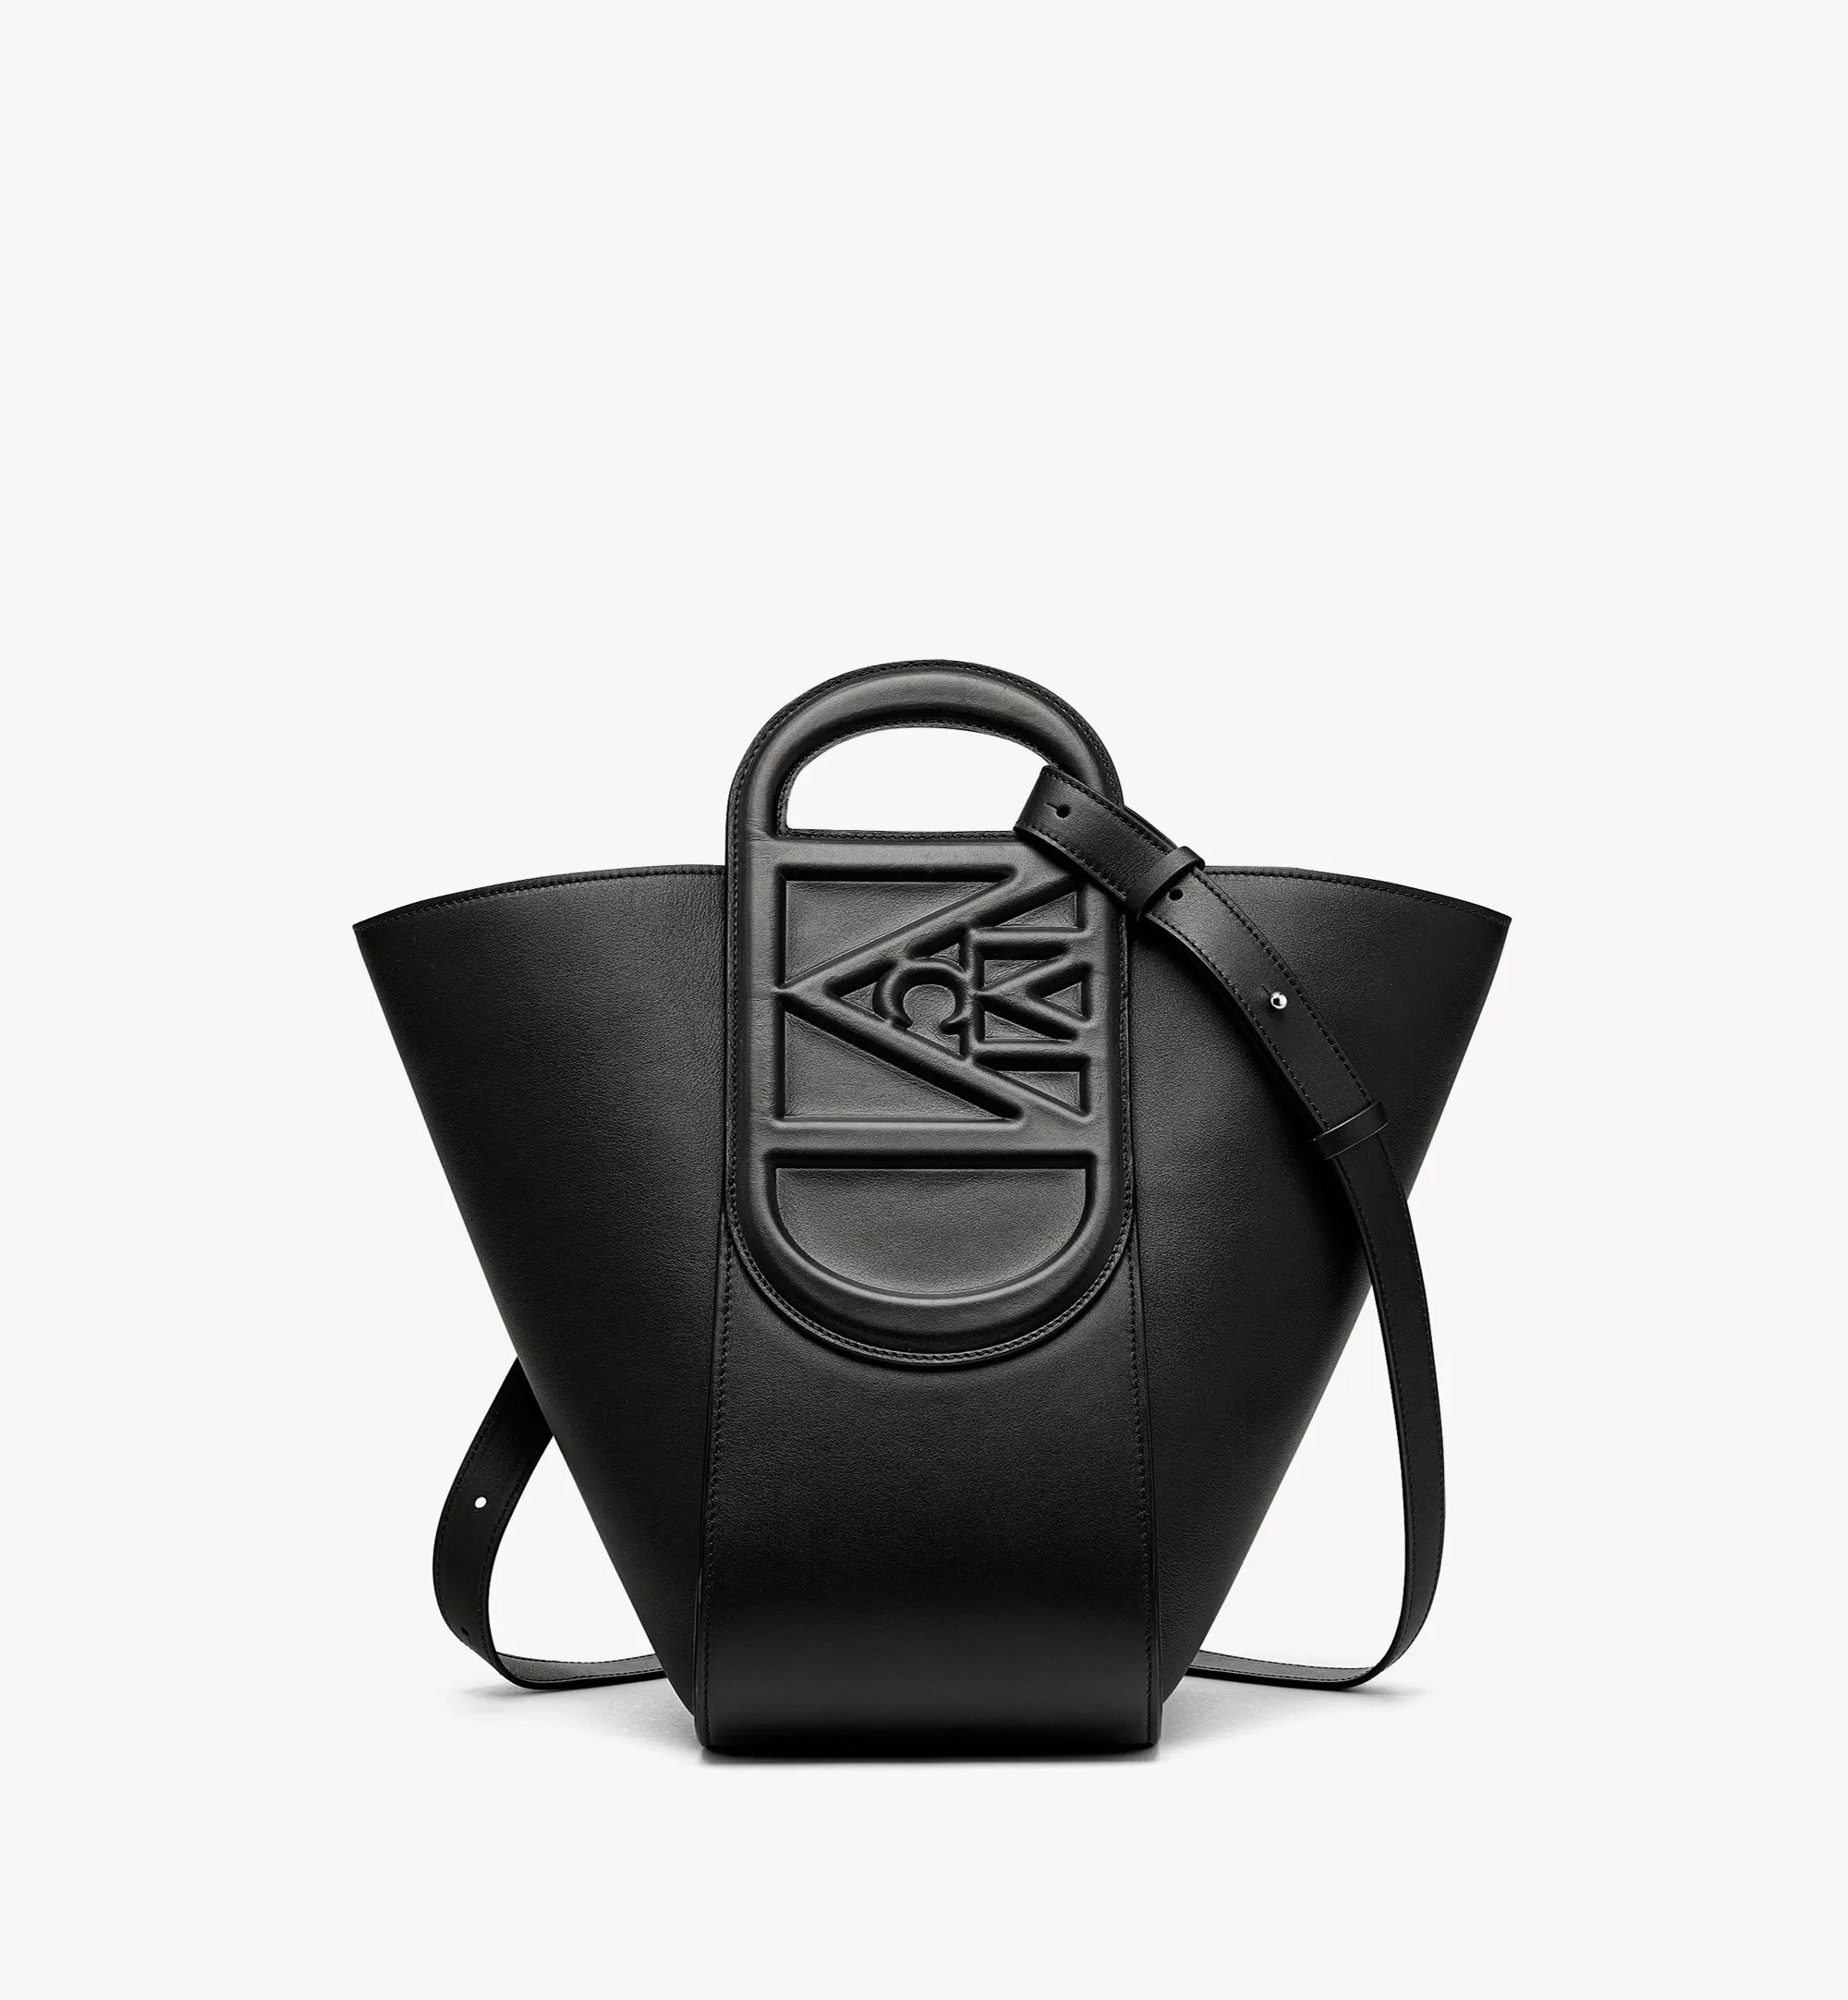 essential fall handbags mcm worldwide 309123 1693246683913